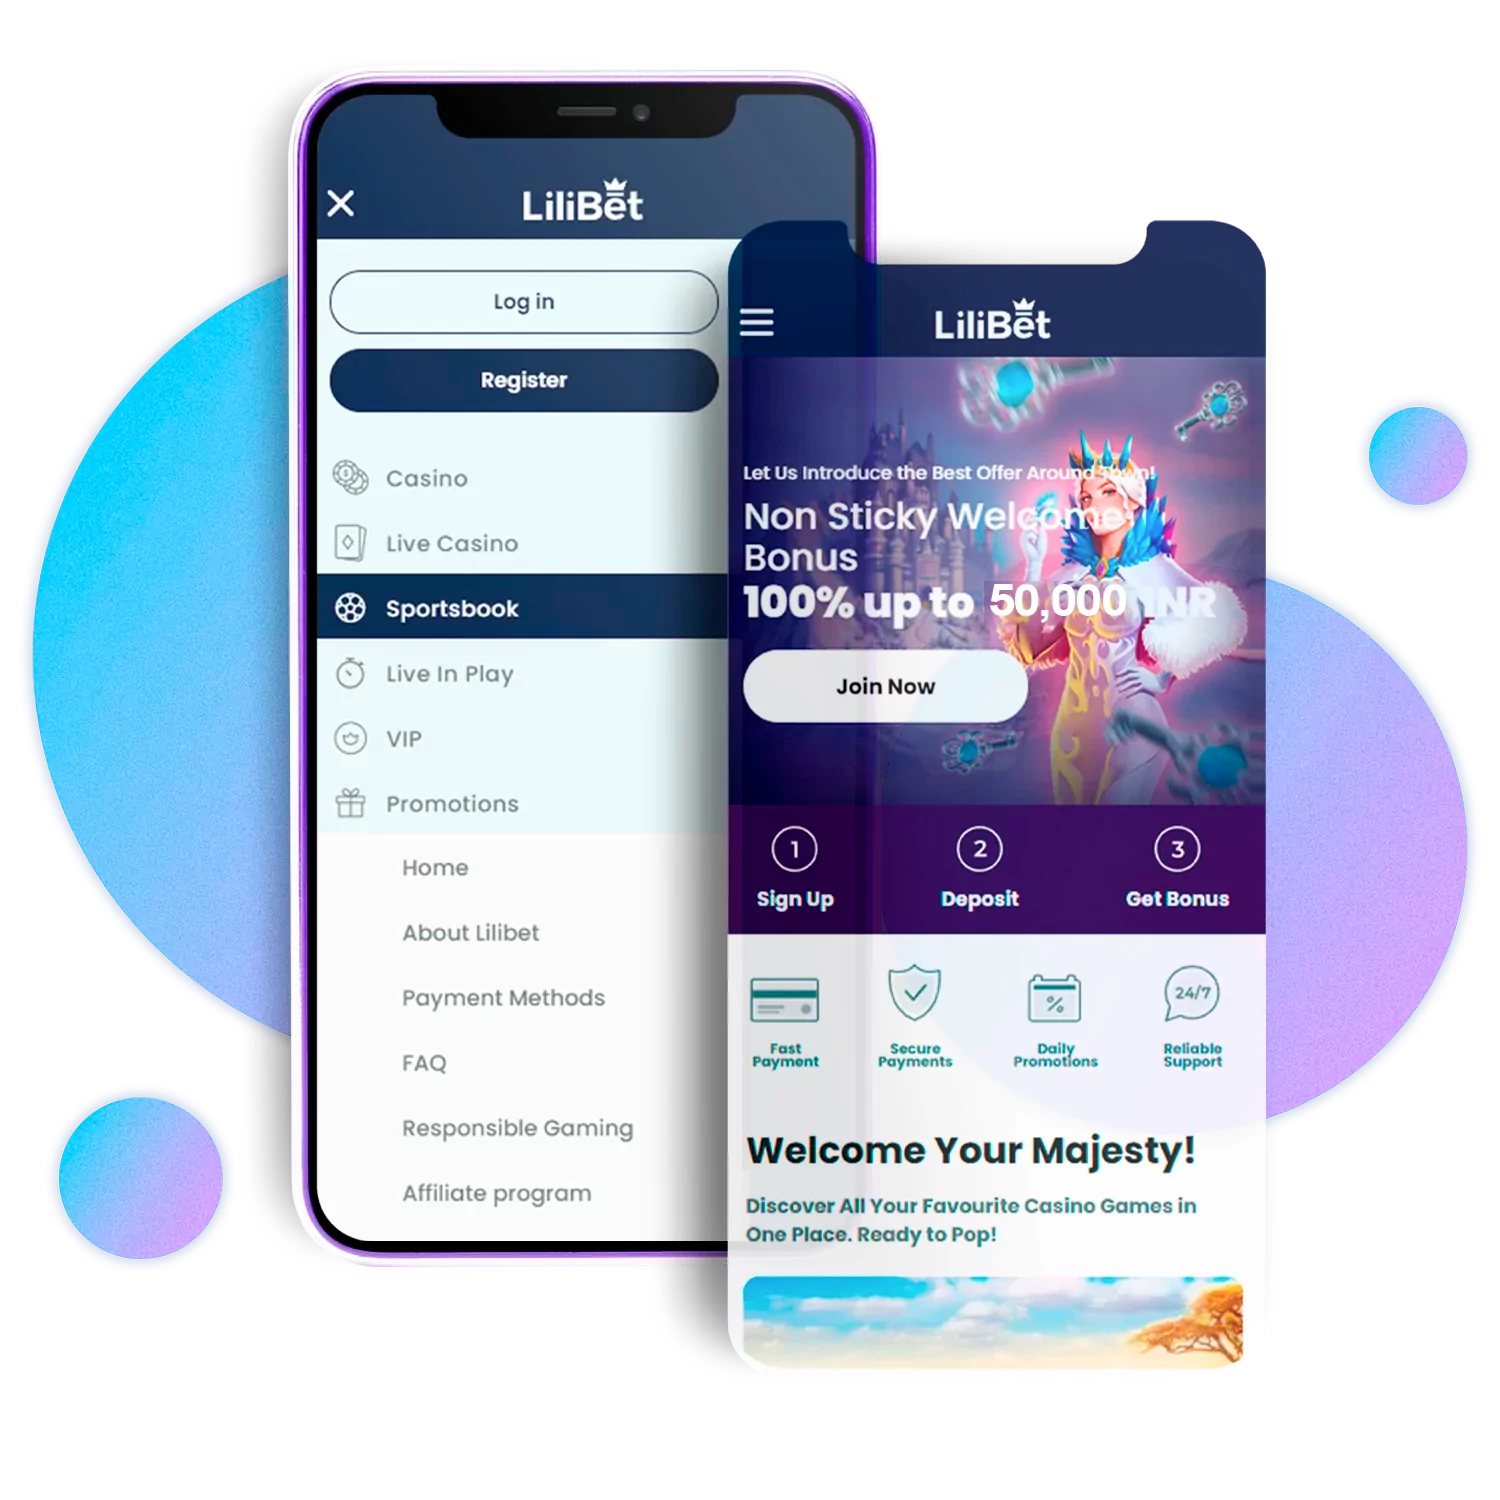 Lilibet Mobile App Information